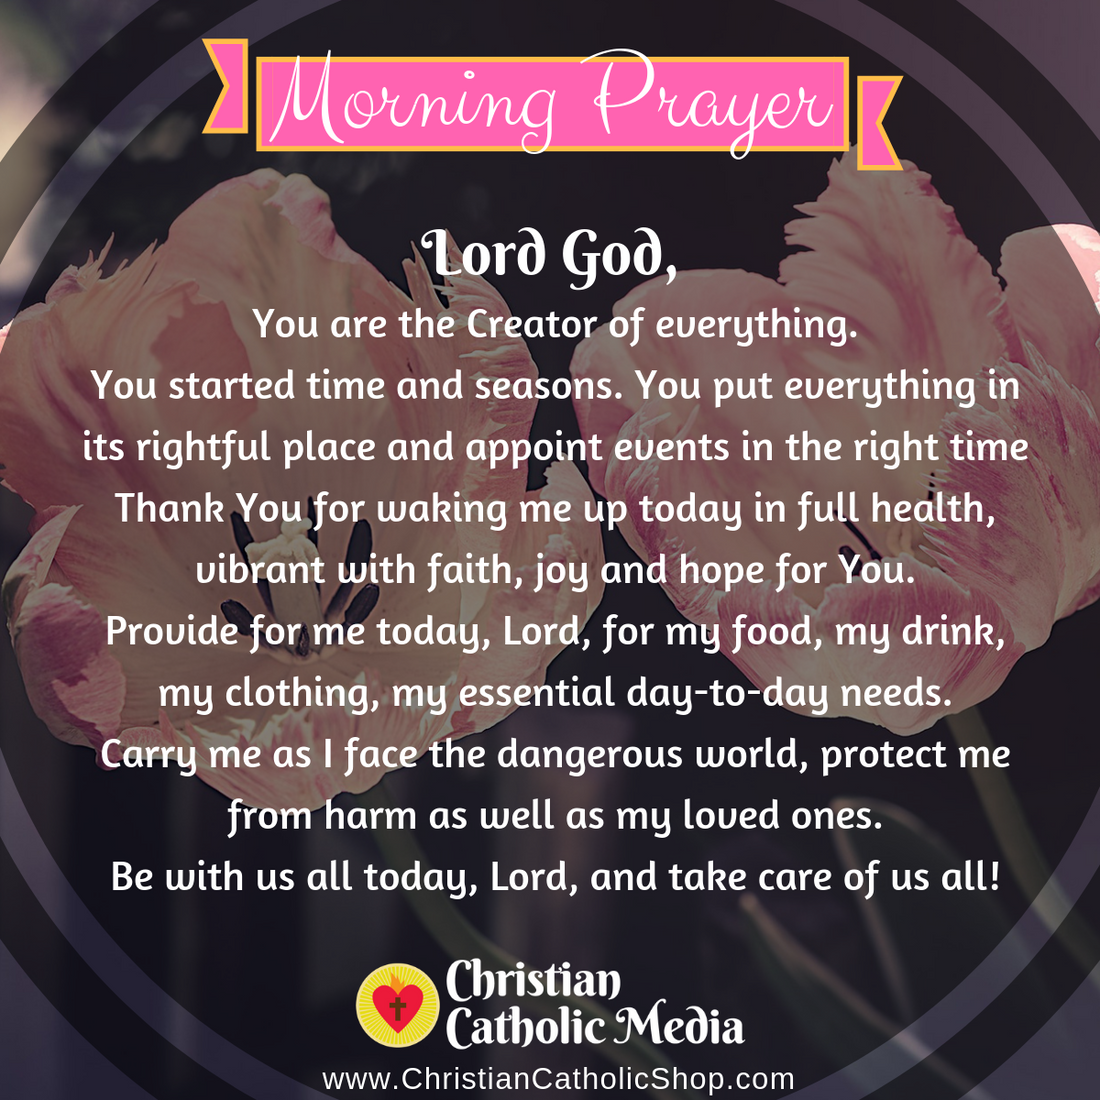 Morning Prayer Catholic Monday 5-4-2020